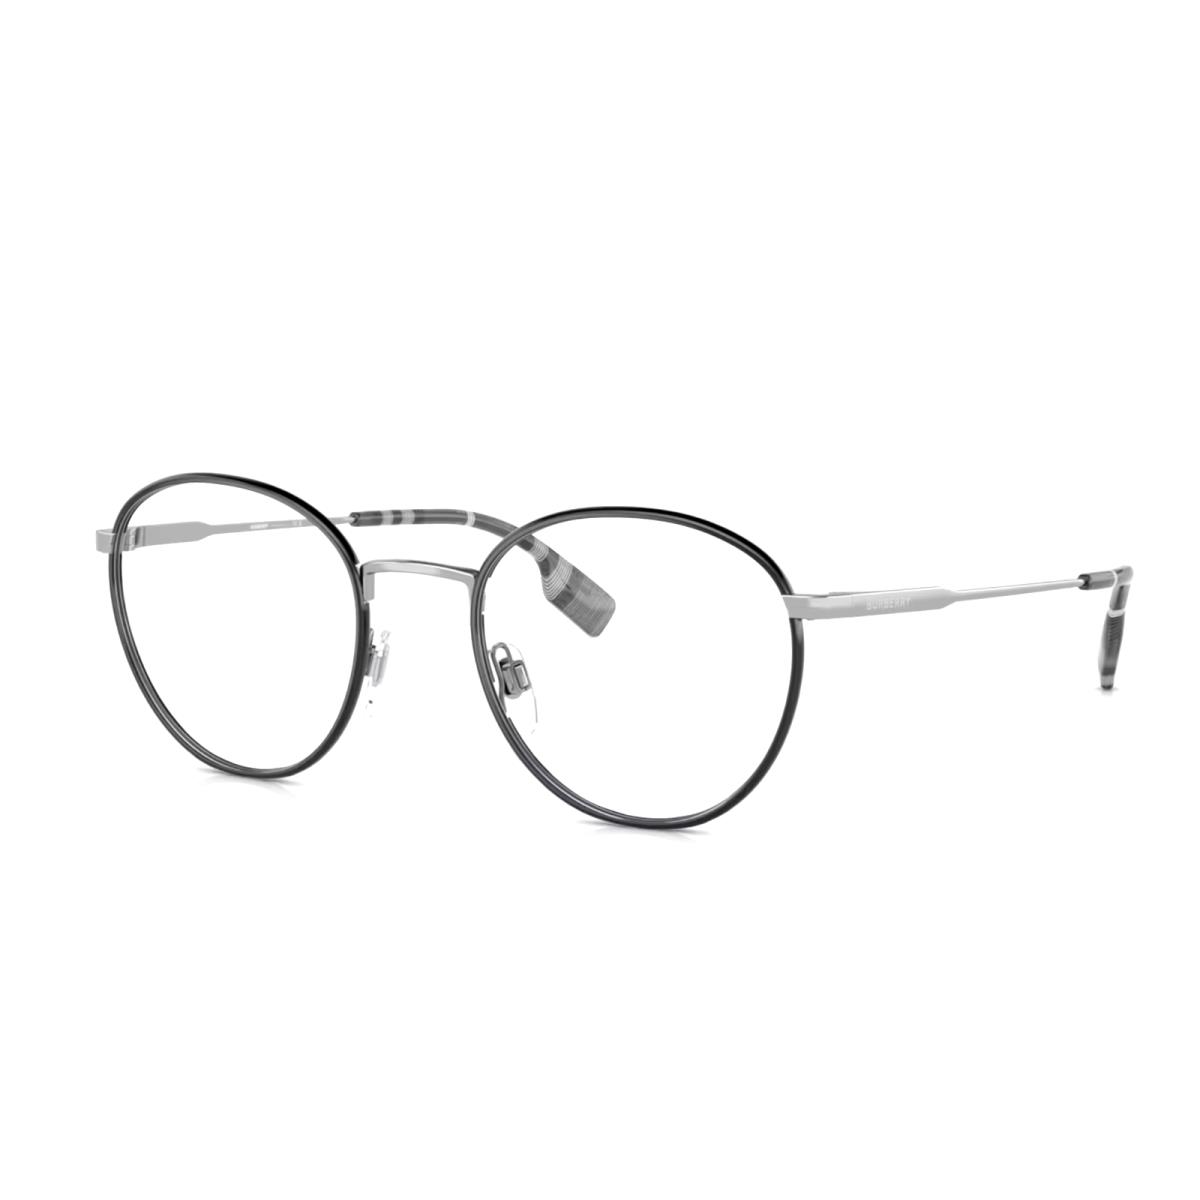 Burberry Hugo Eyeglasses B 1373 1003 51-21 145 Black Gunmetal Round Frames - Frame: Gunmetal & Black